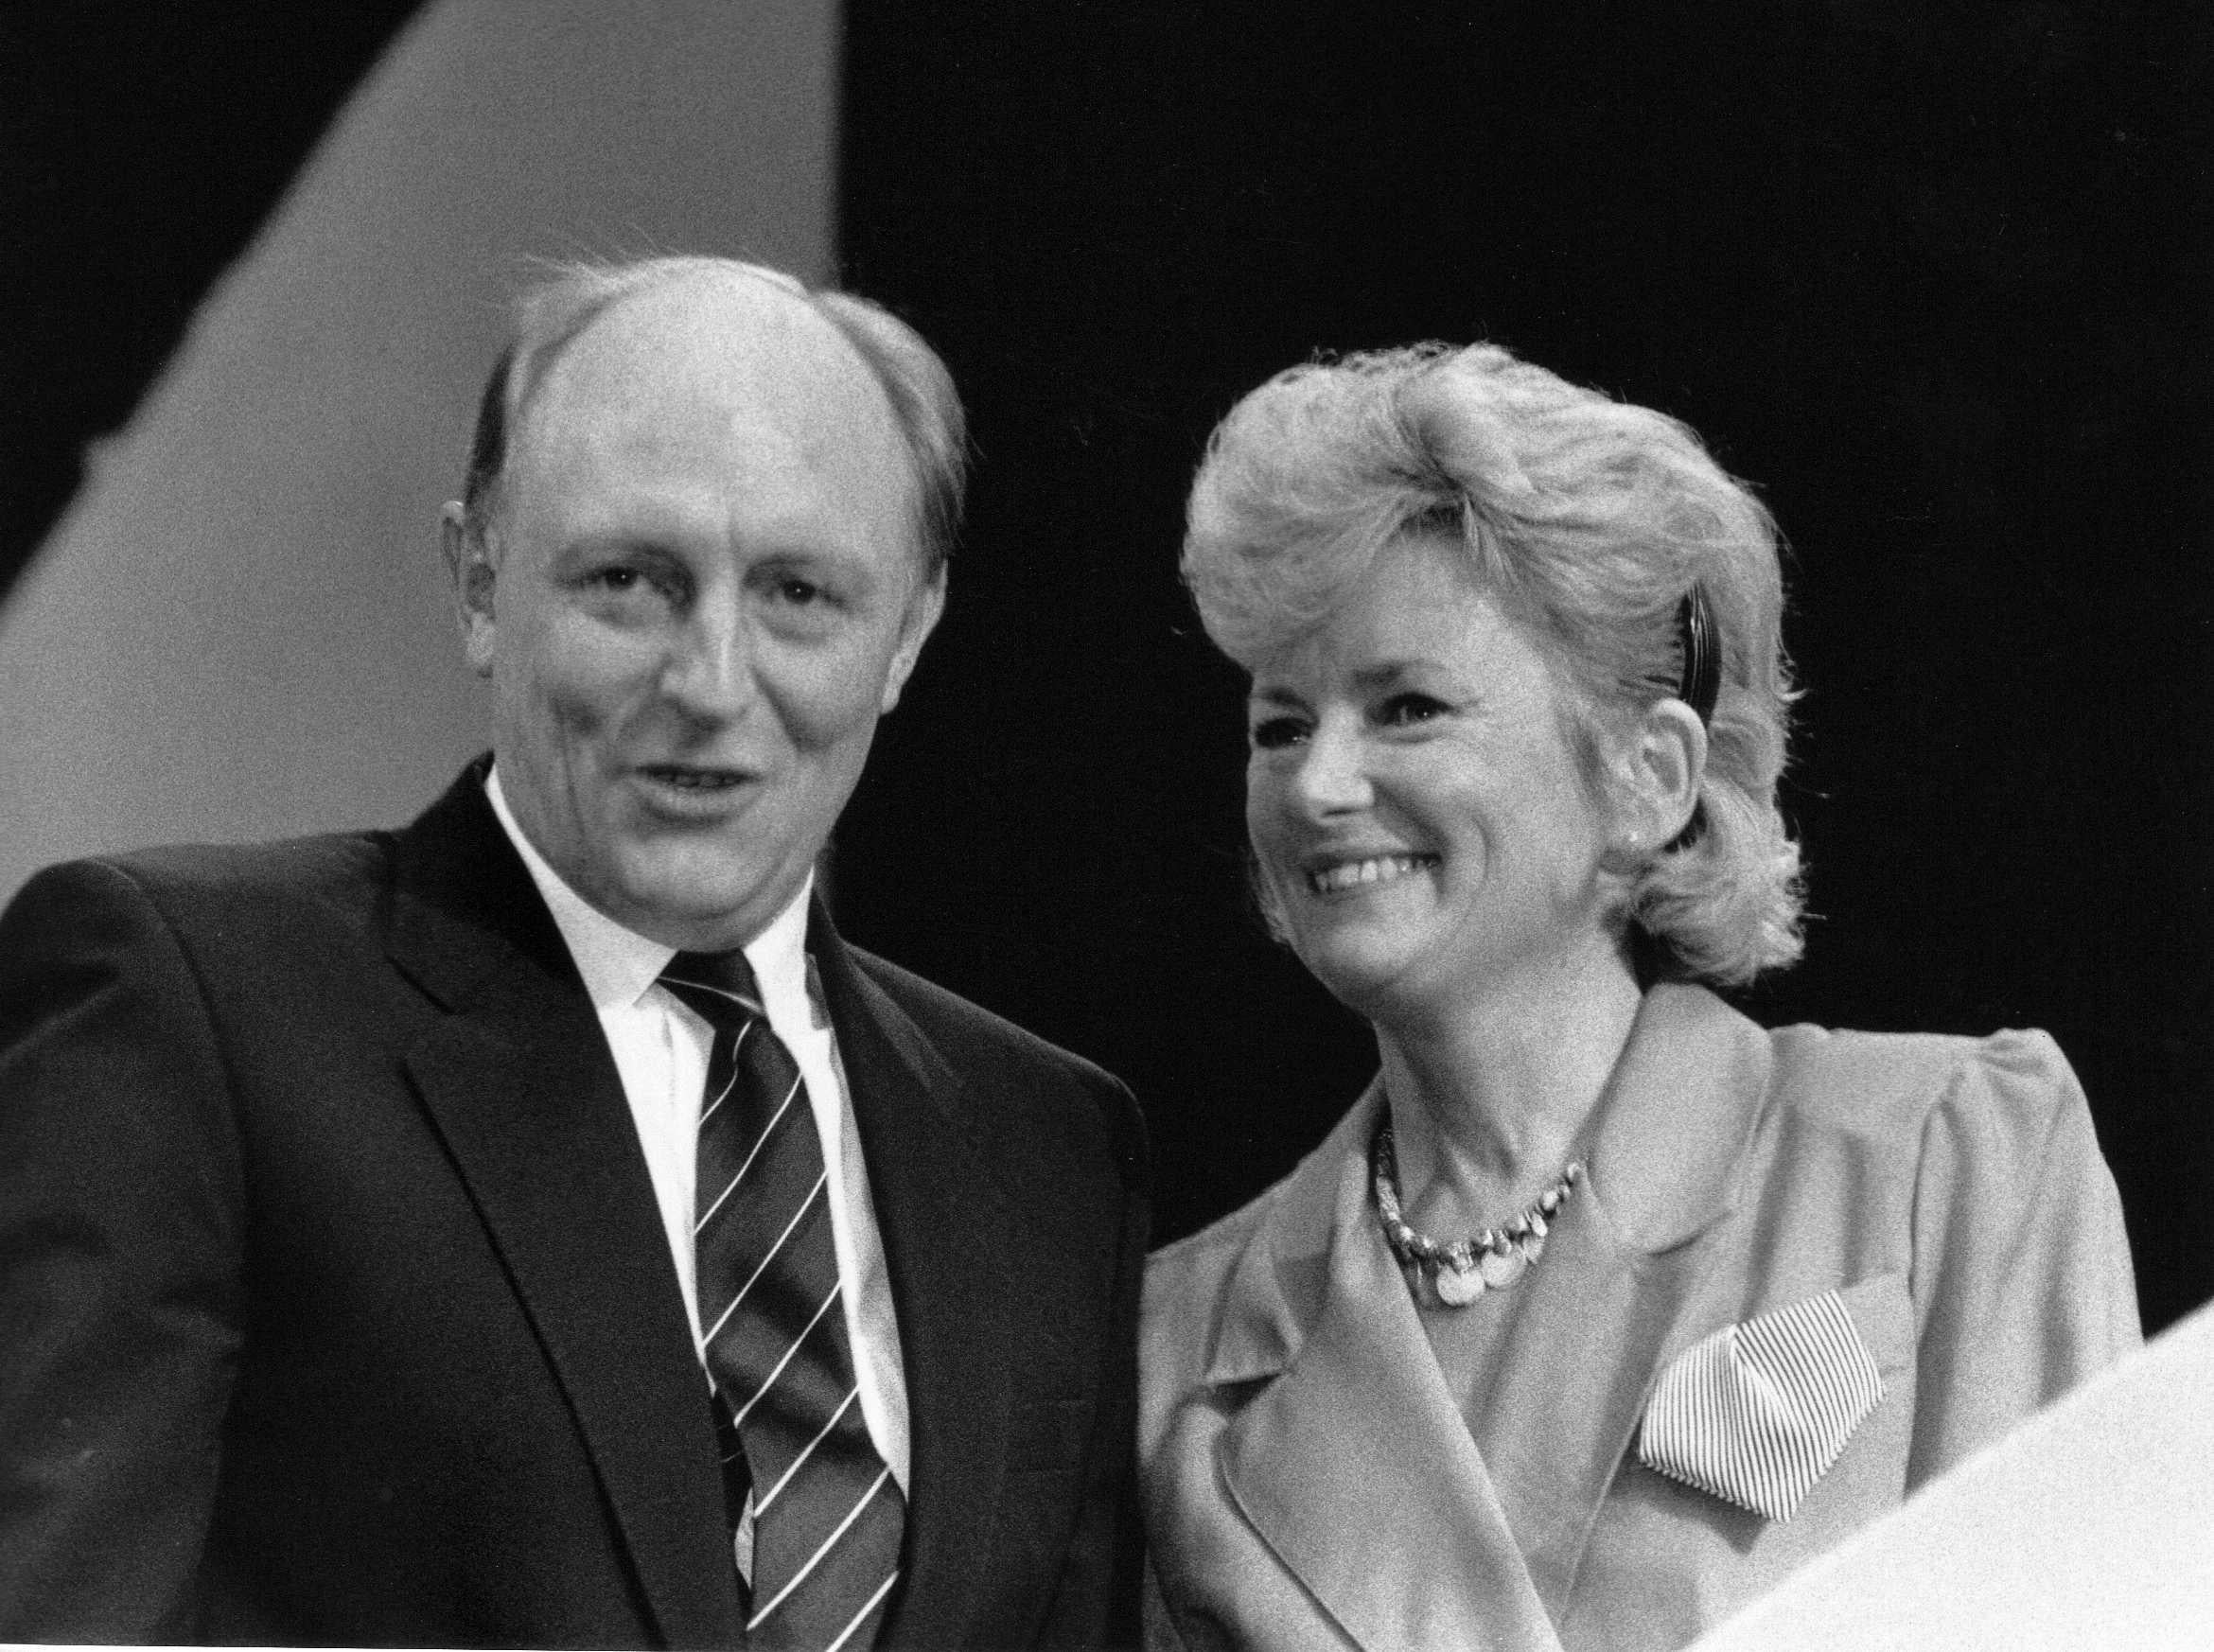 Glenys and Neil Kinnock; Glenys is on the list